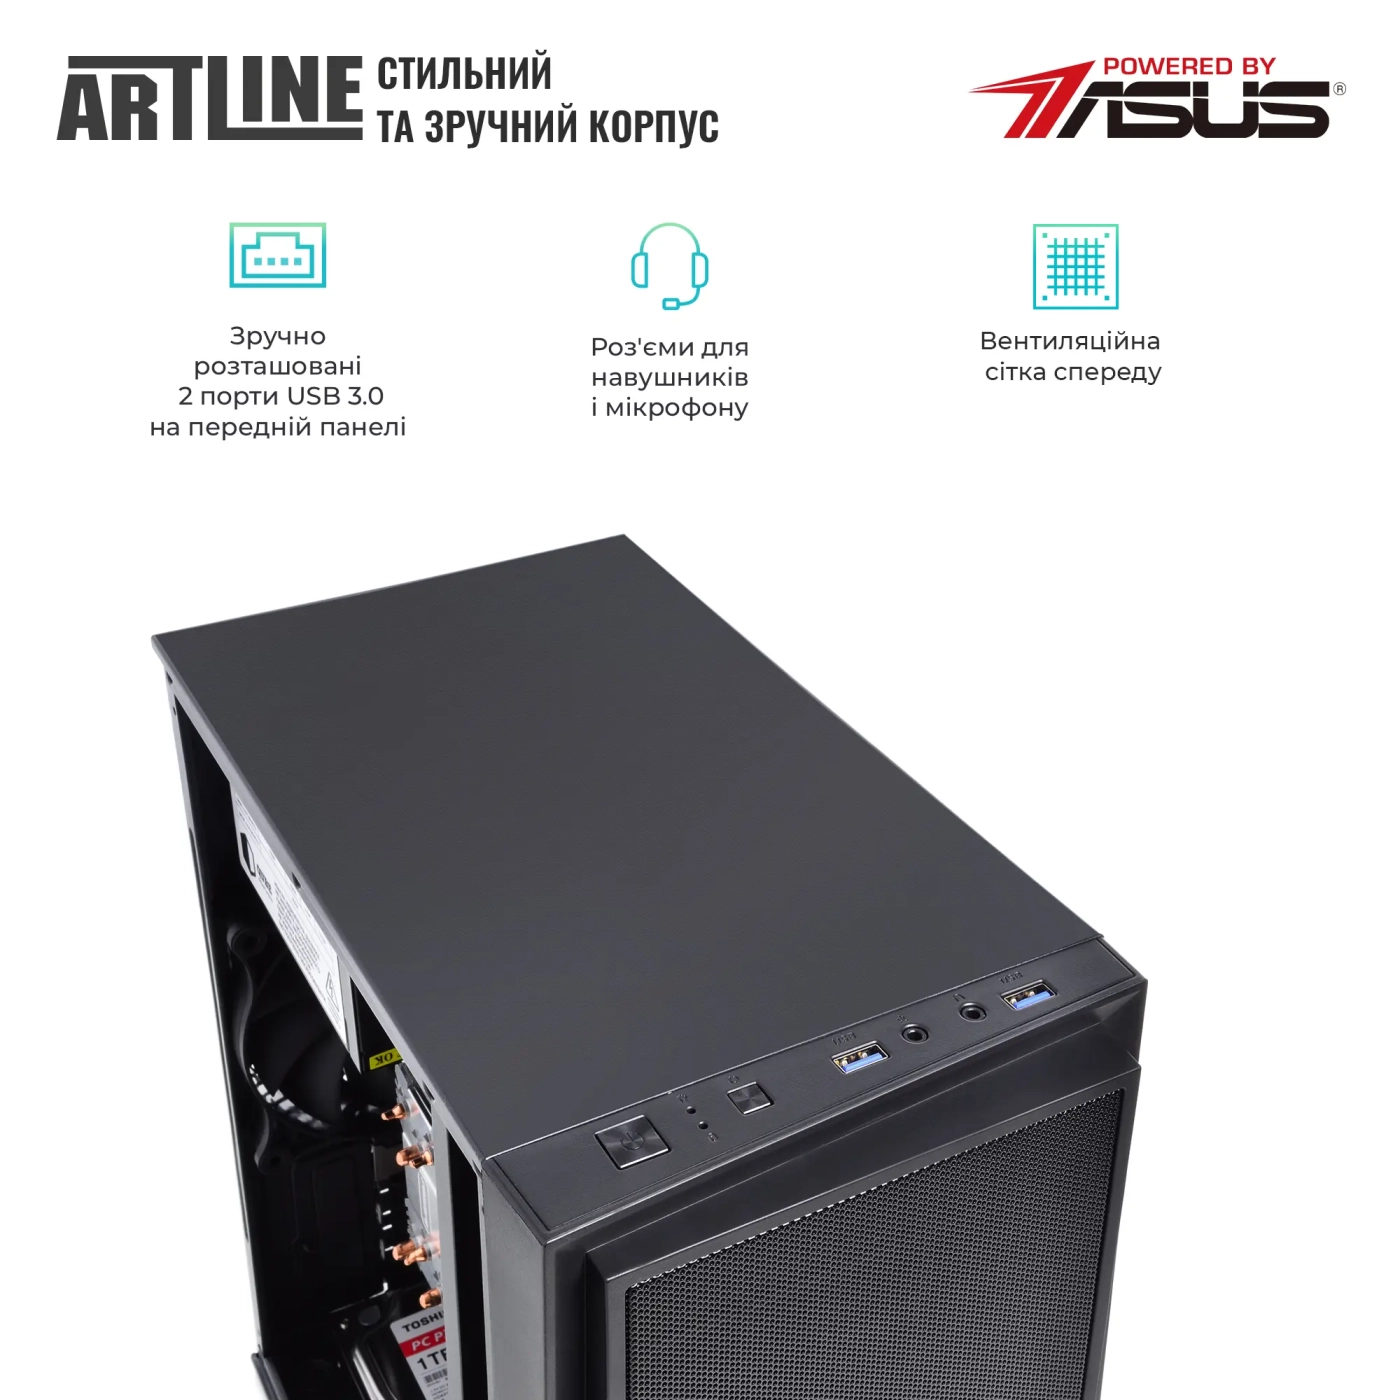 Купить Компьютер ARTLINE Business Plus B59 (B59v49) - фото 2